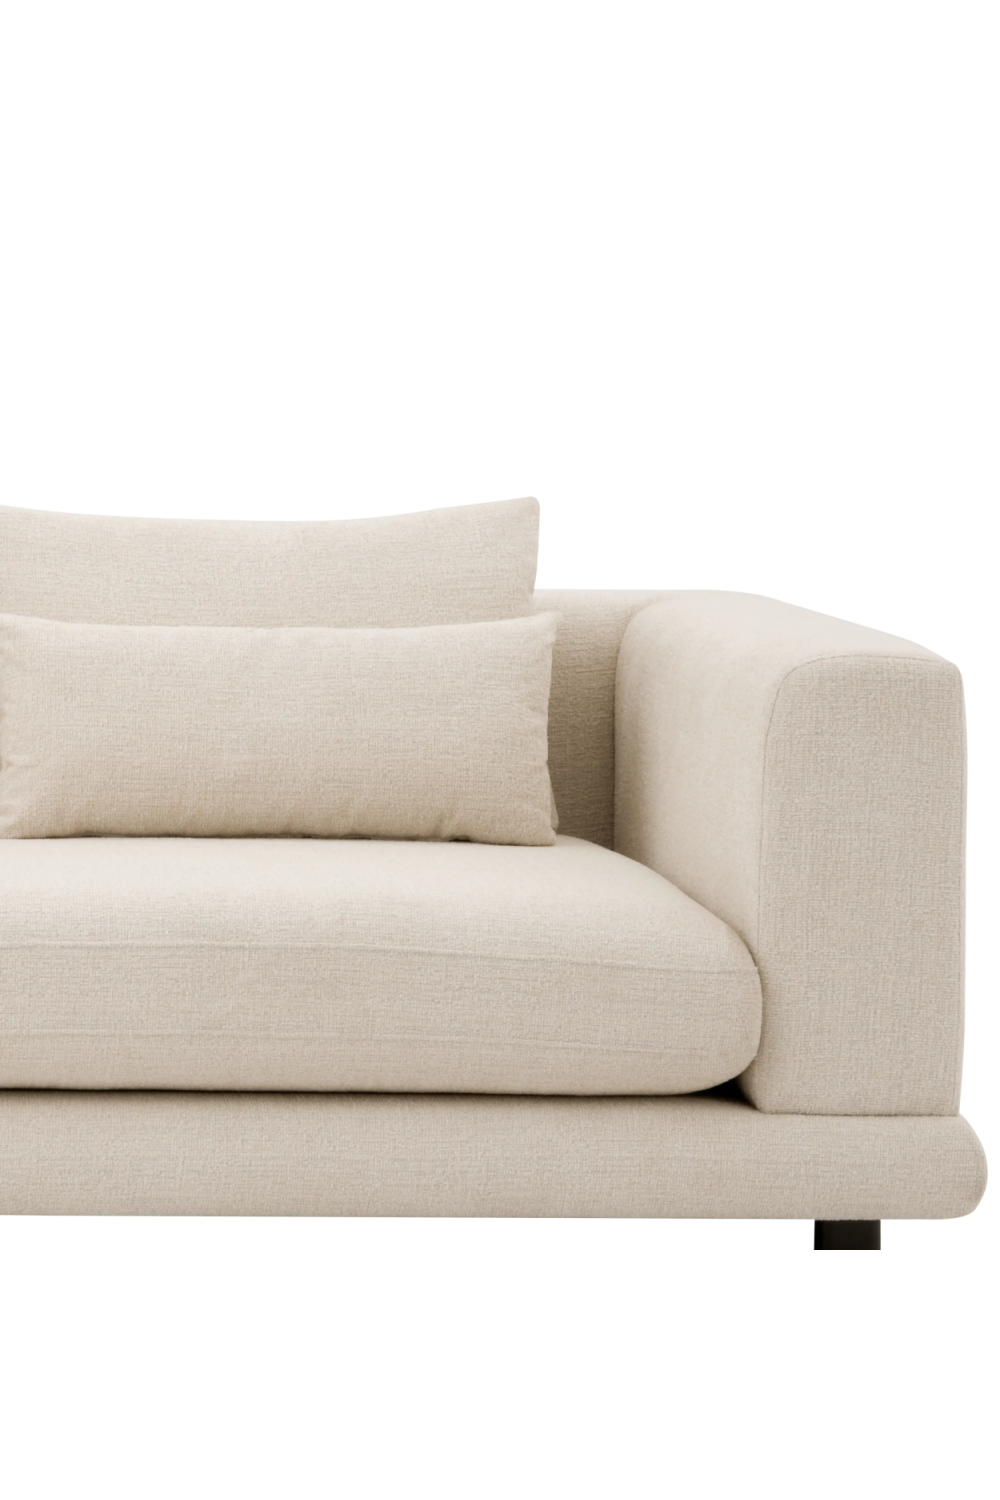 Beige Modern Minimalist Sofa | Eichholtz Di Angelo | Oroa.com